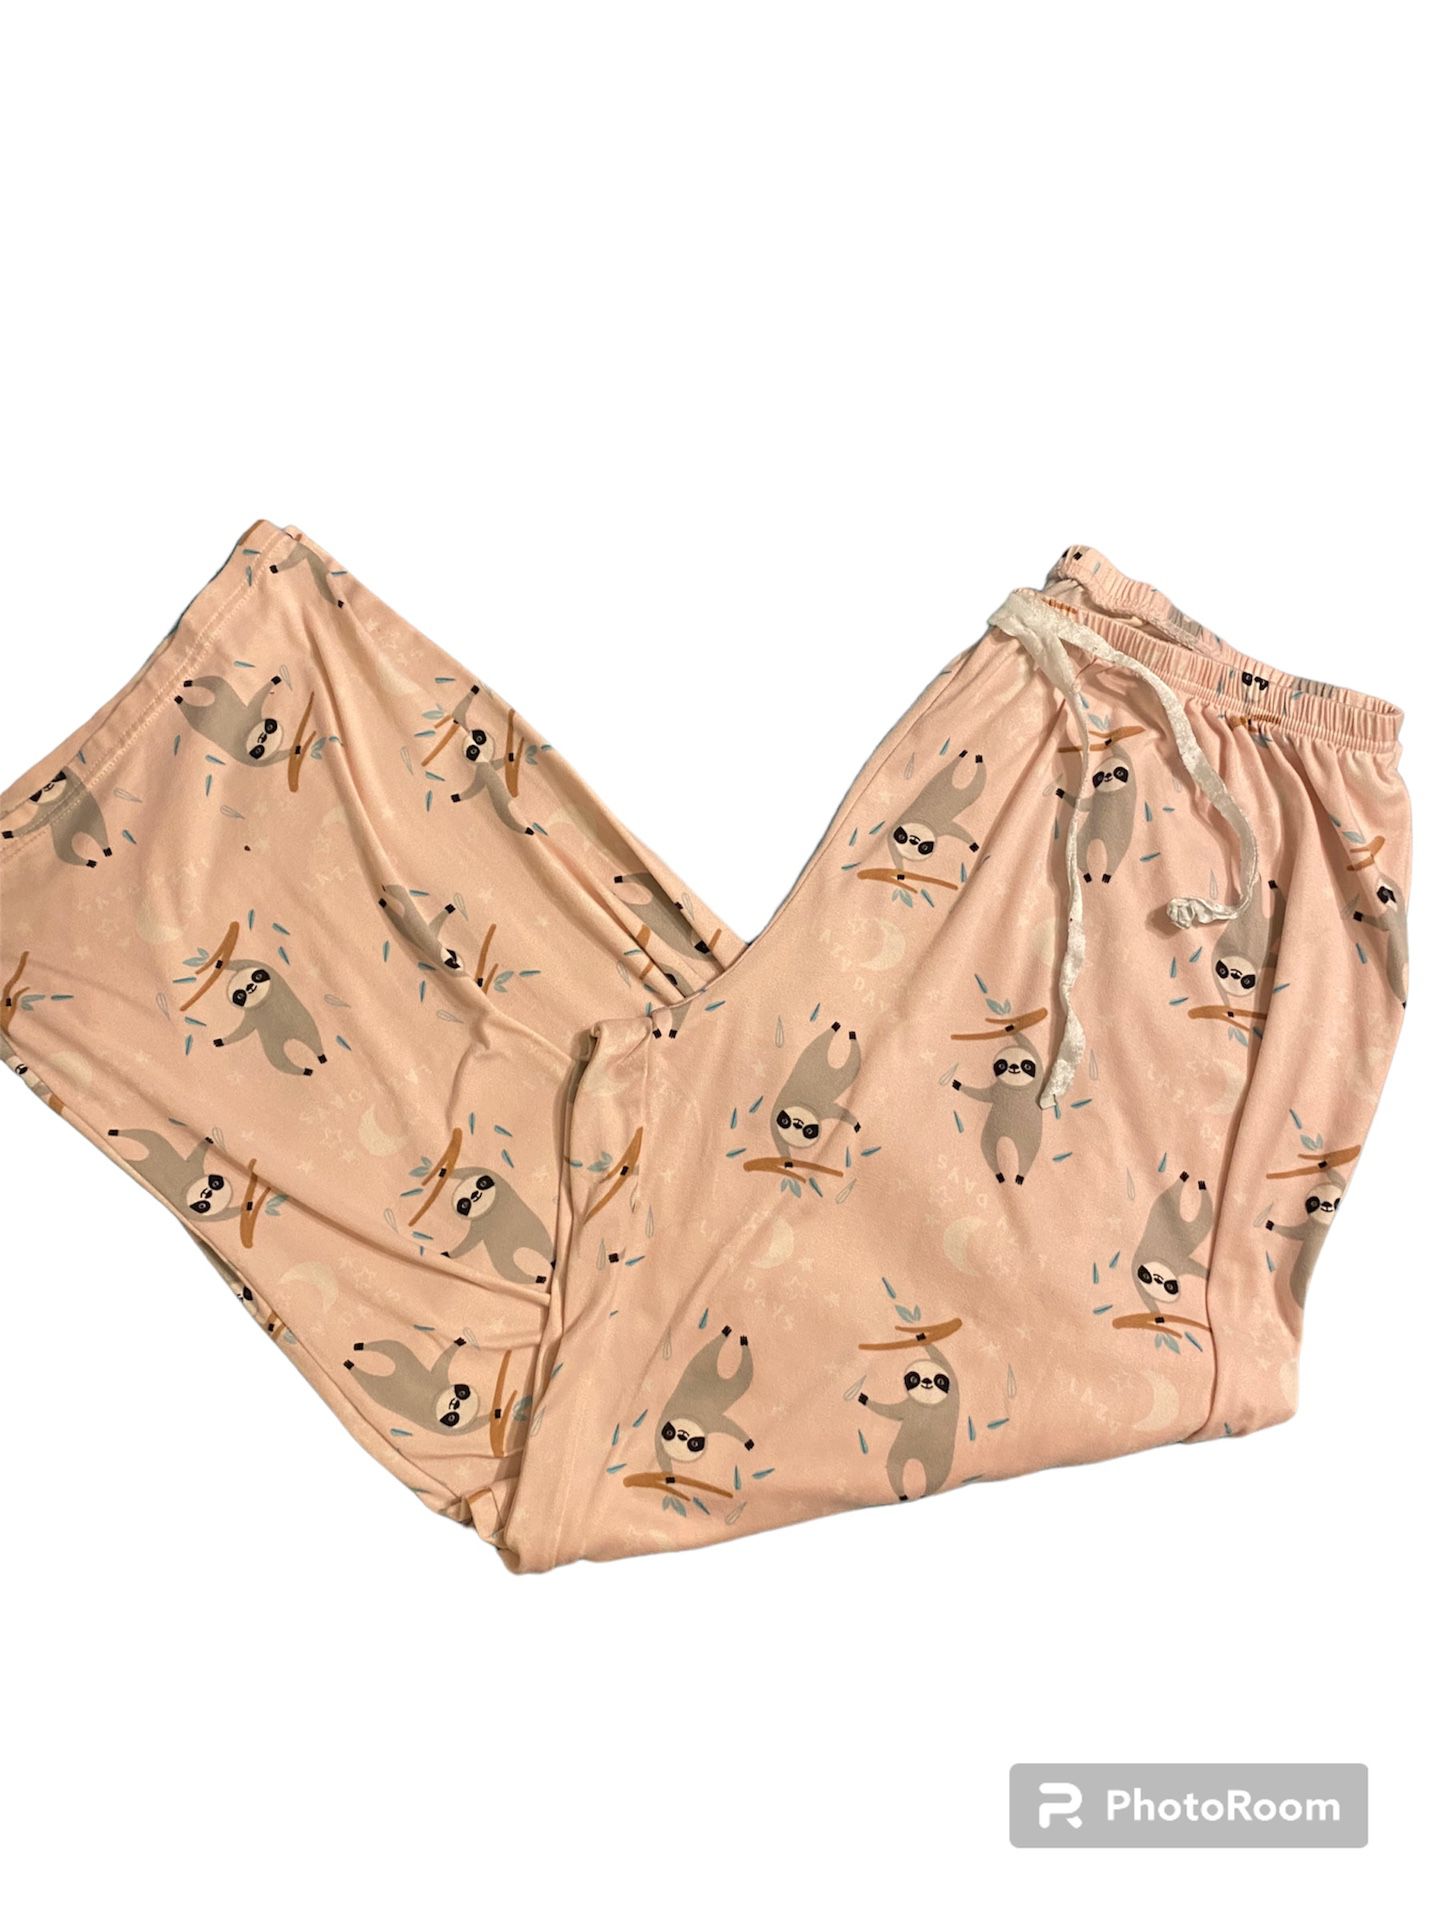 Bobbie Brooks women’s sloth pajama bottoms, size 1x